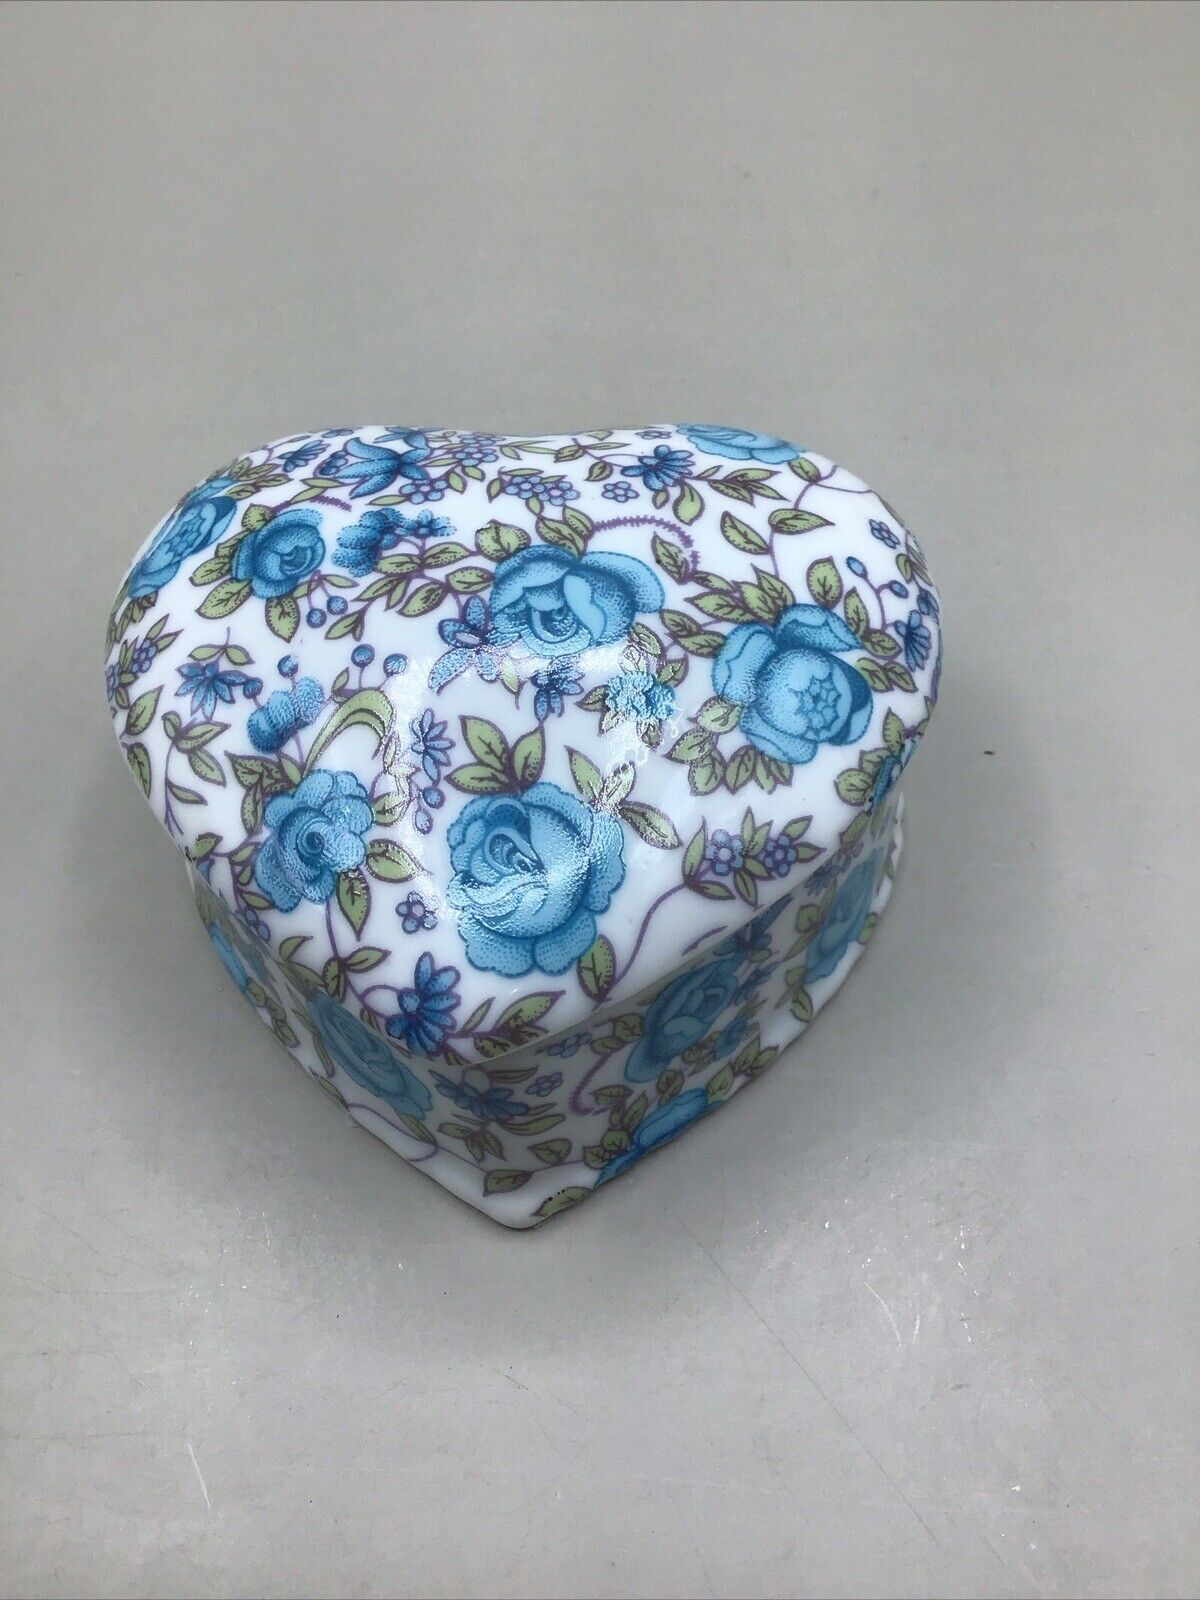 VTG White Porcelain Trinket Box With Hand Painted Blue Flowers. Sweet Design.